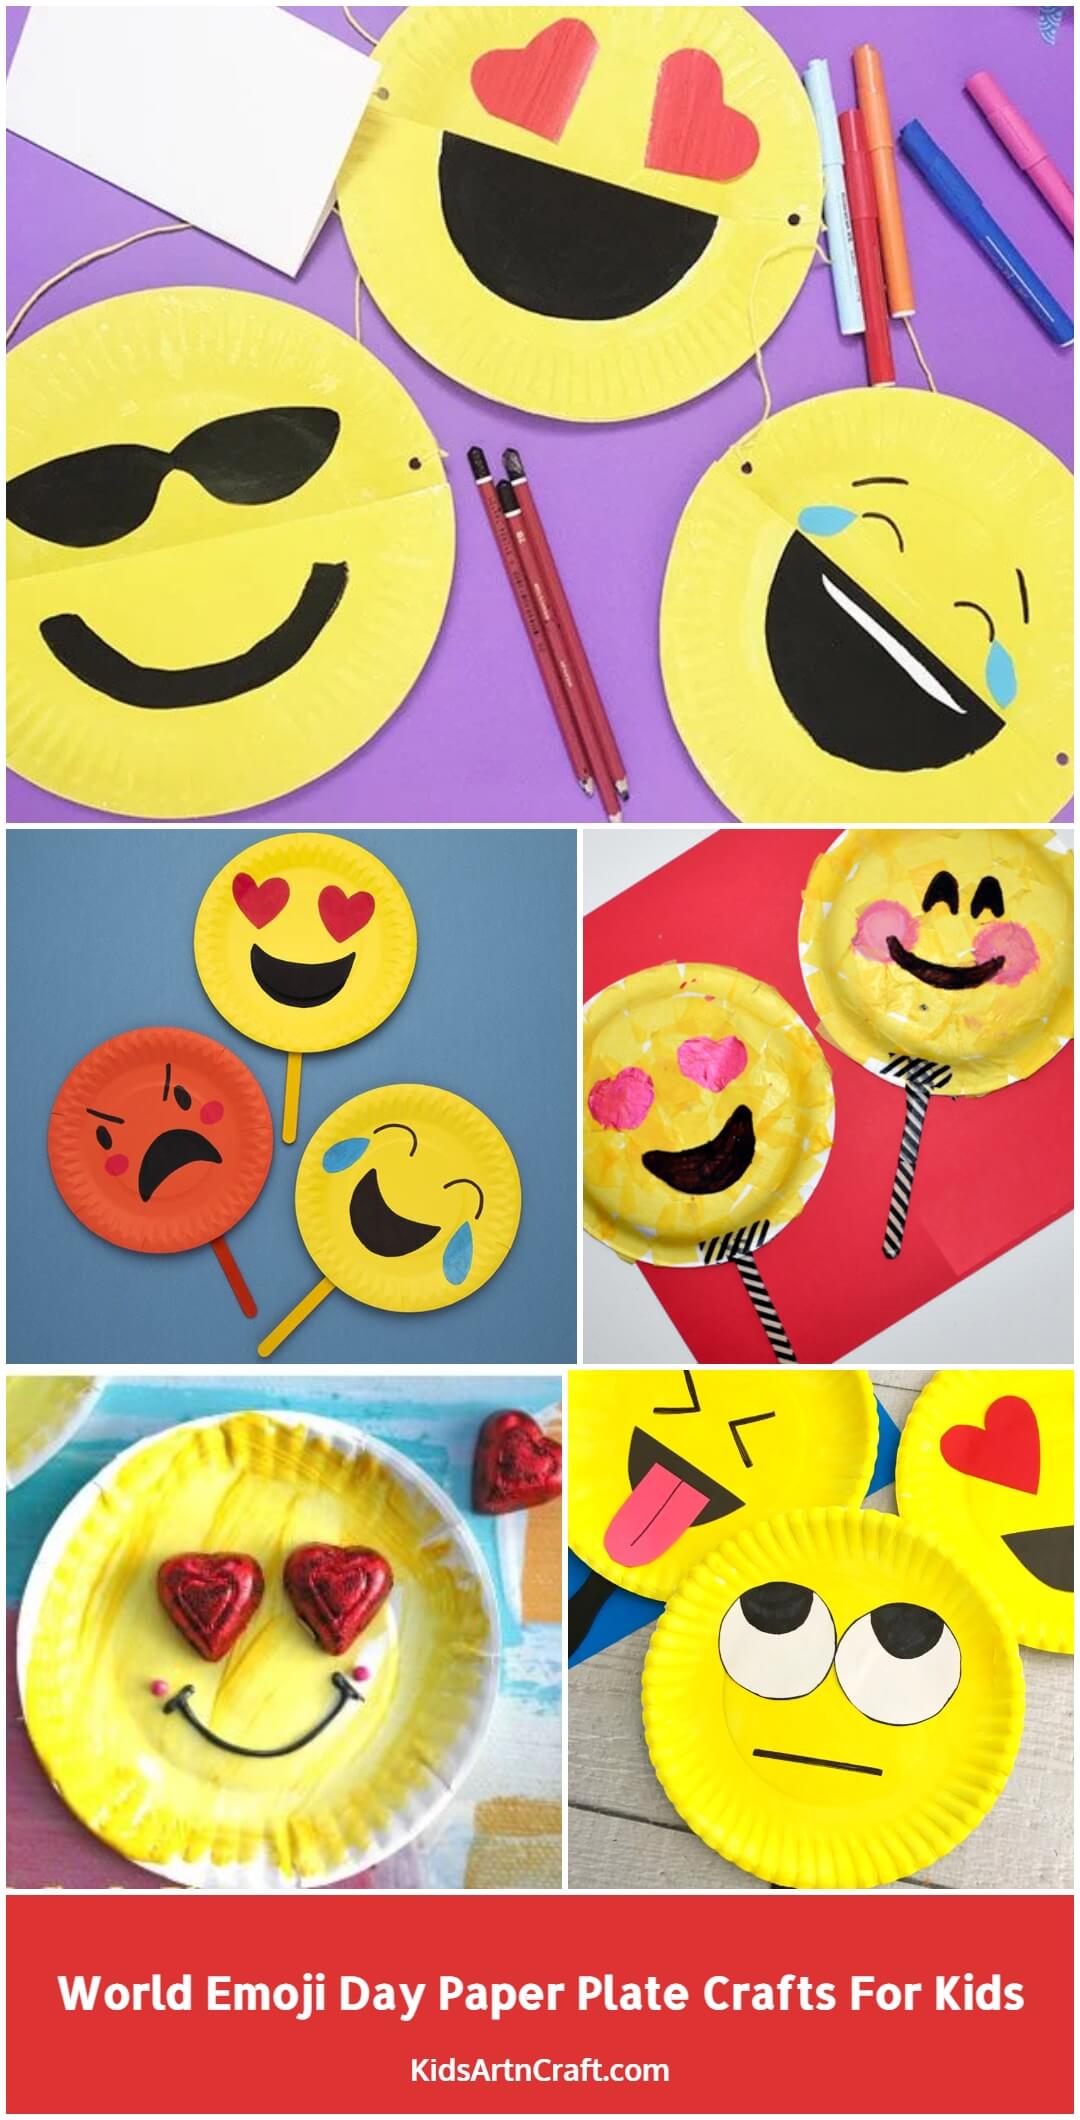 World Emoji Day Paper Plate Crafts for Kids